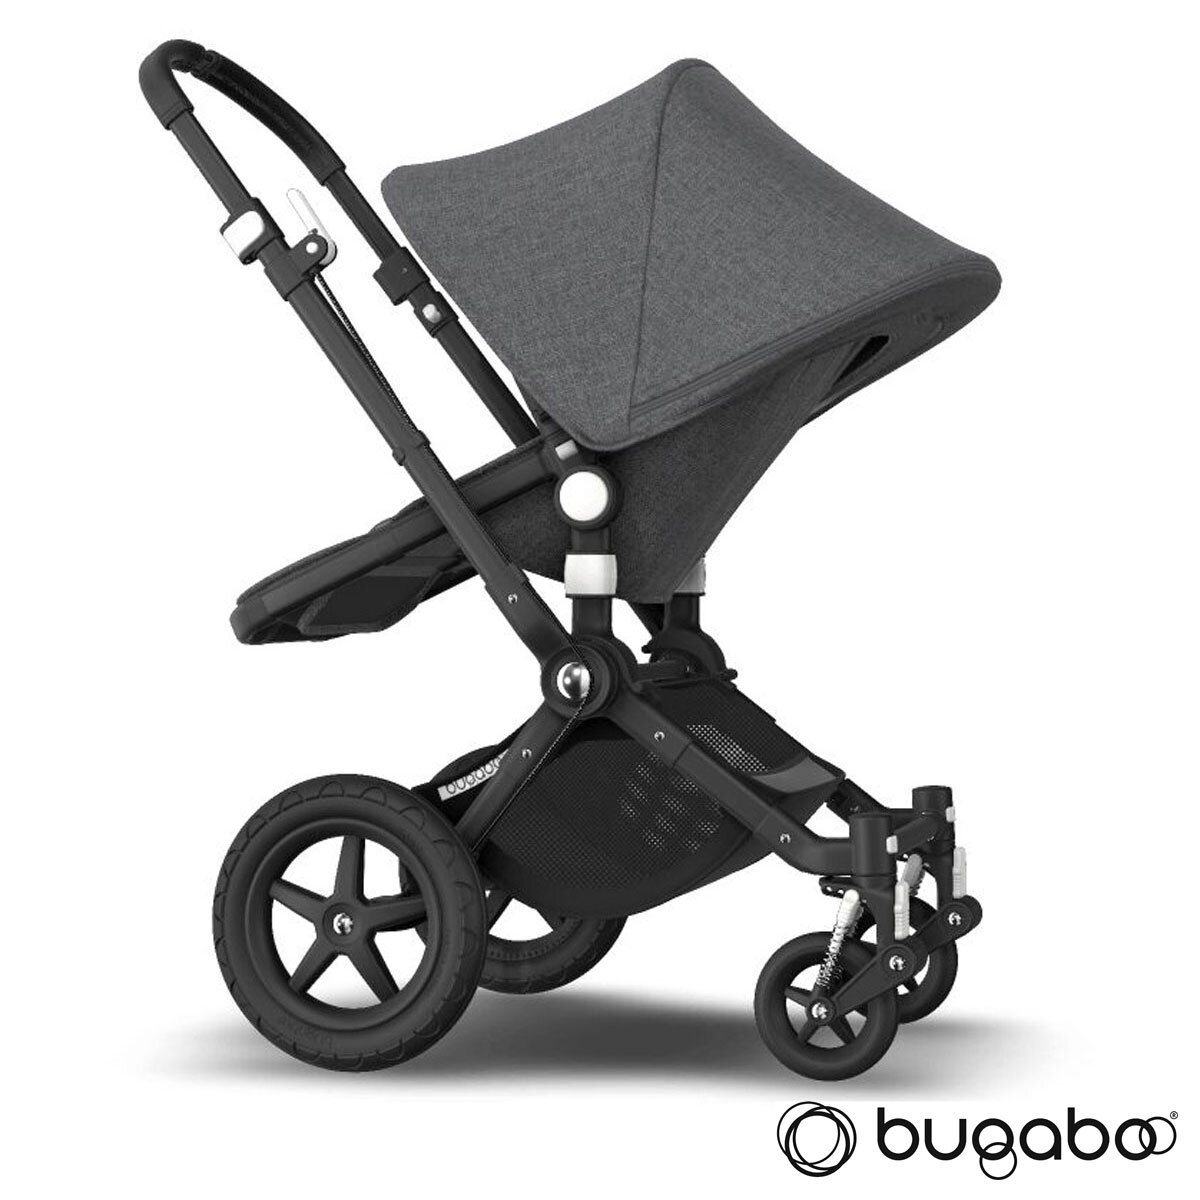 Bugaboo Cameleon3 Base Stroller Review